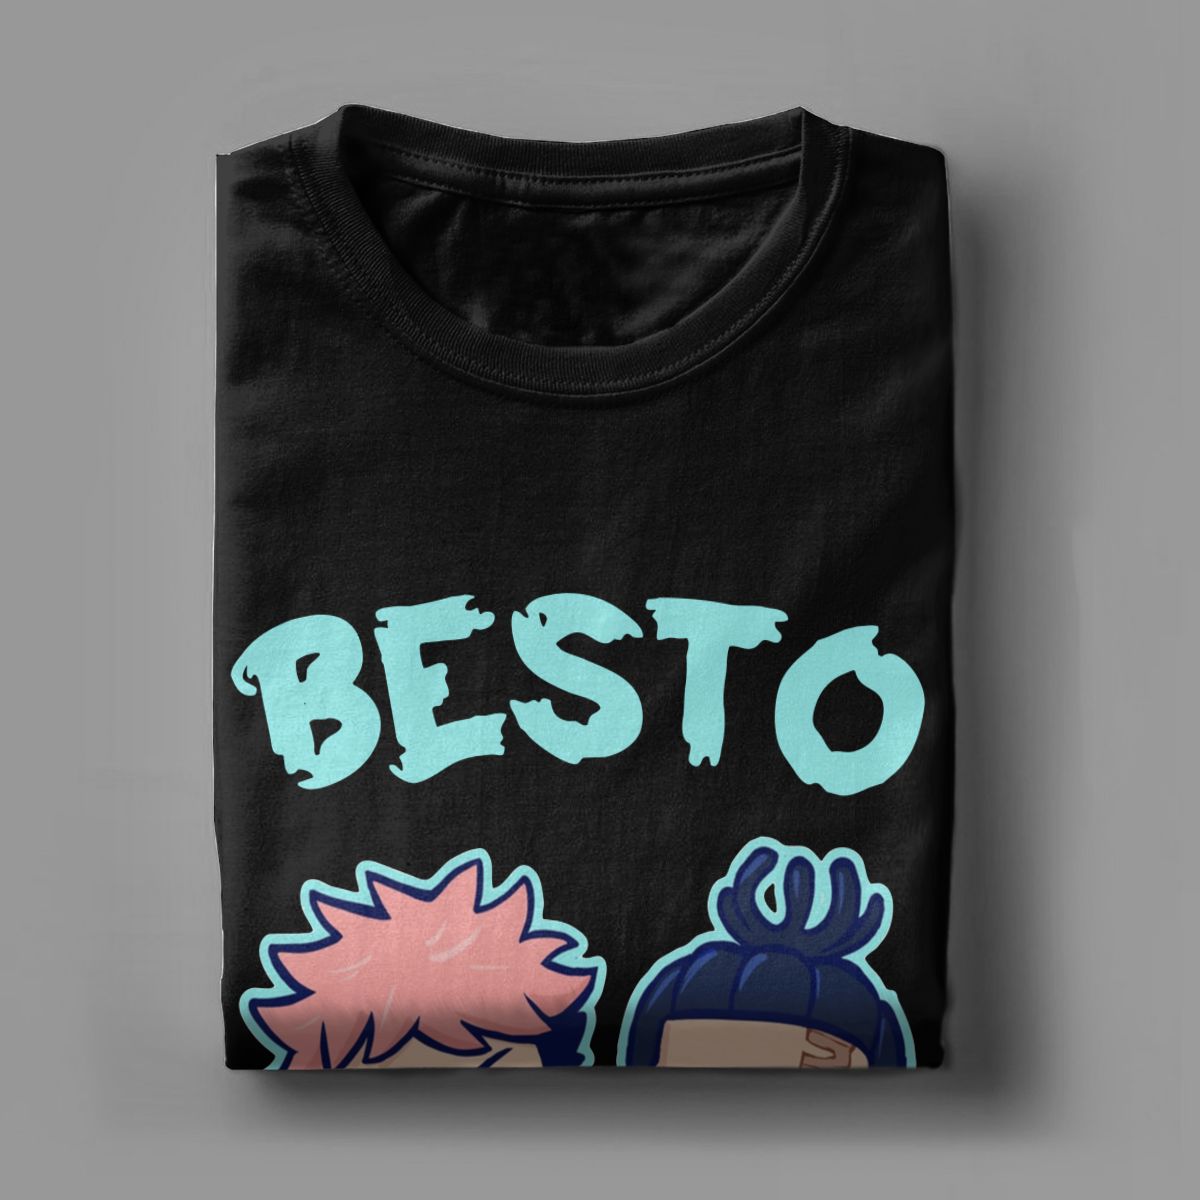 Jujutsu Kaisen – Yuji Itadori Themed T-Shirts Featuring “Besto Friend” (15+ Designs) T-Shirts & Tank Tops